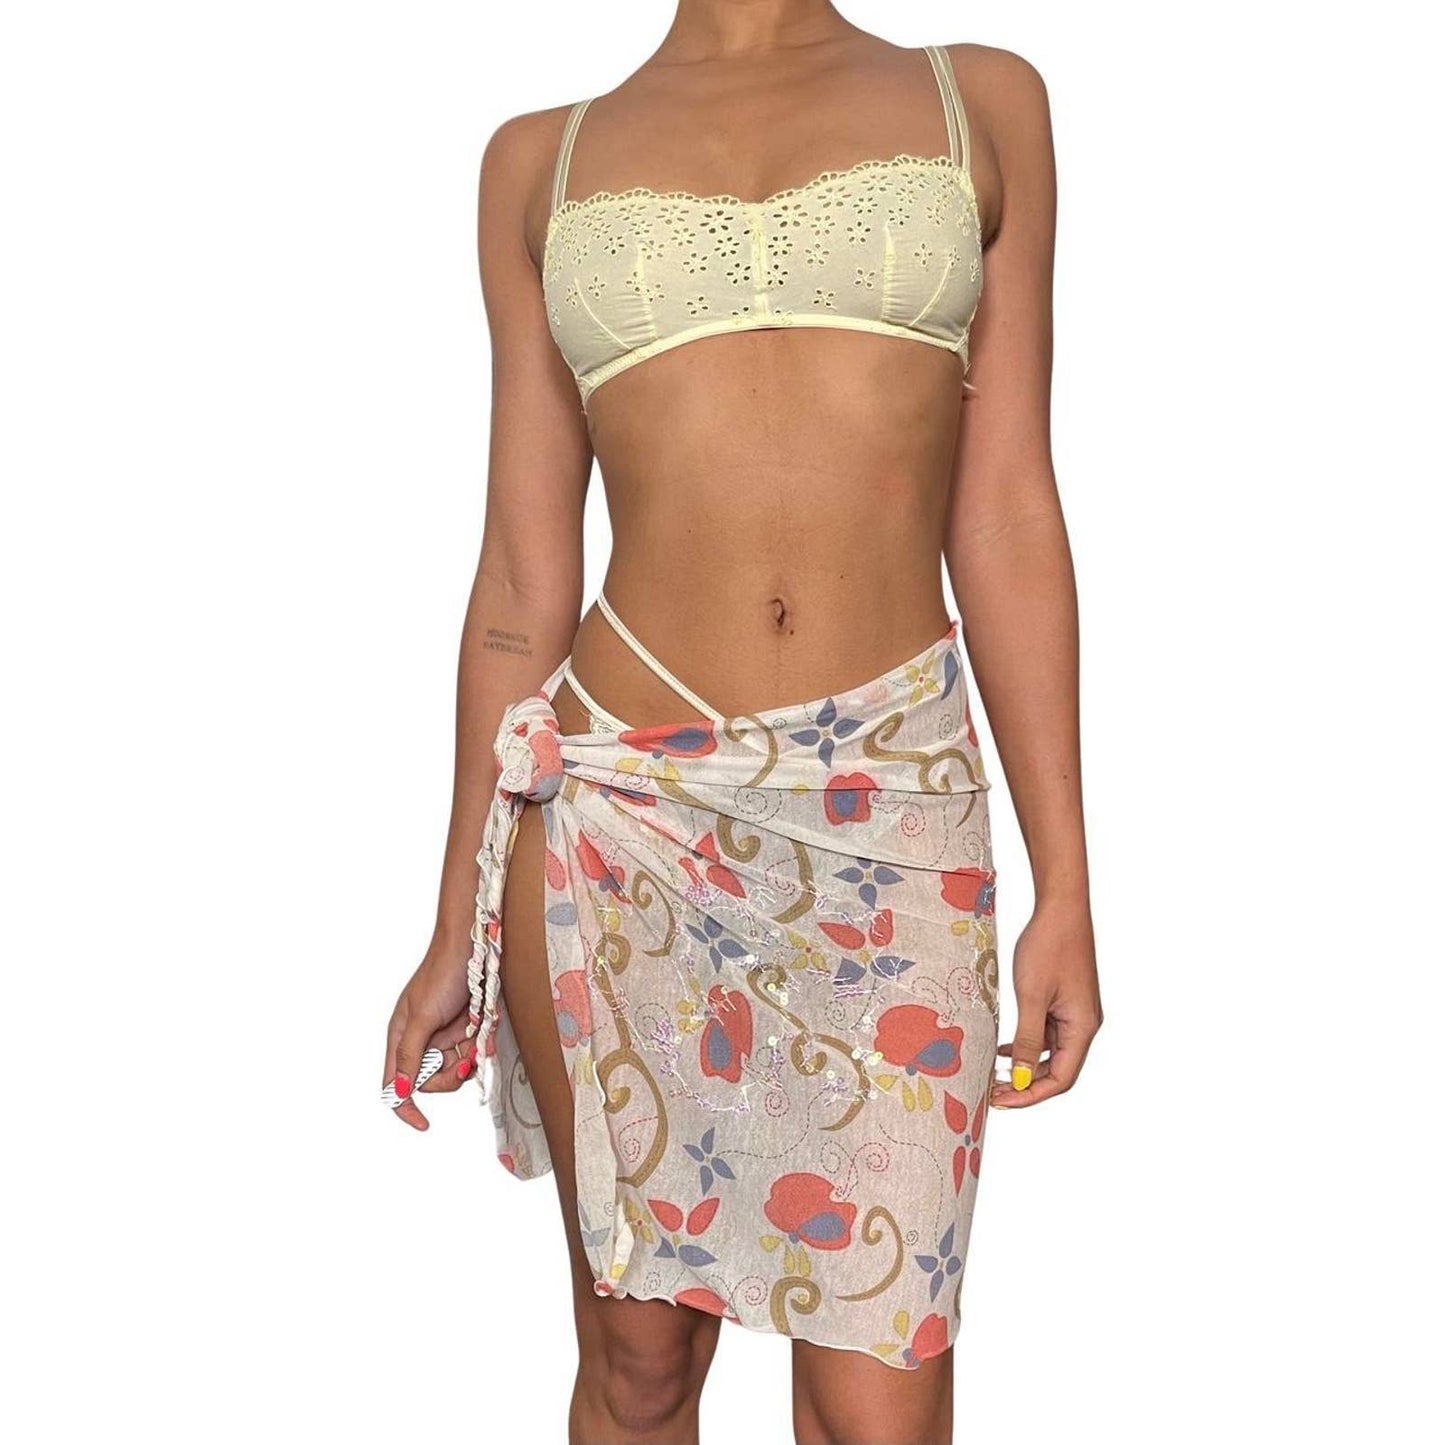 Vintage 2000s mesh print mini skirt